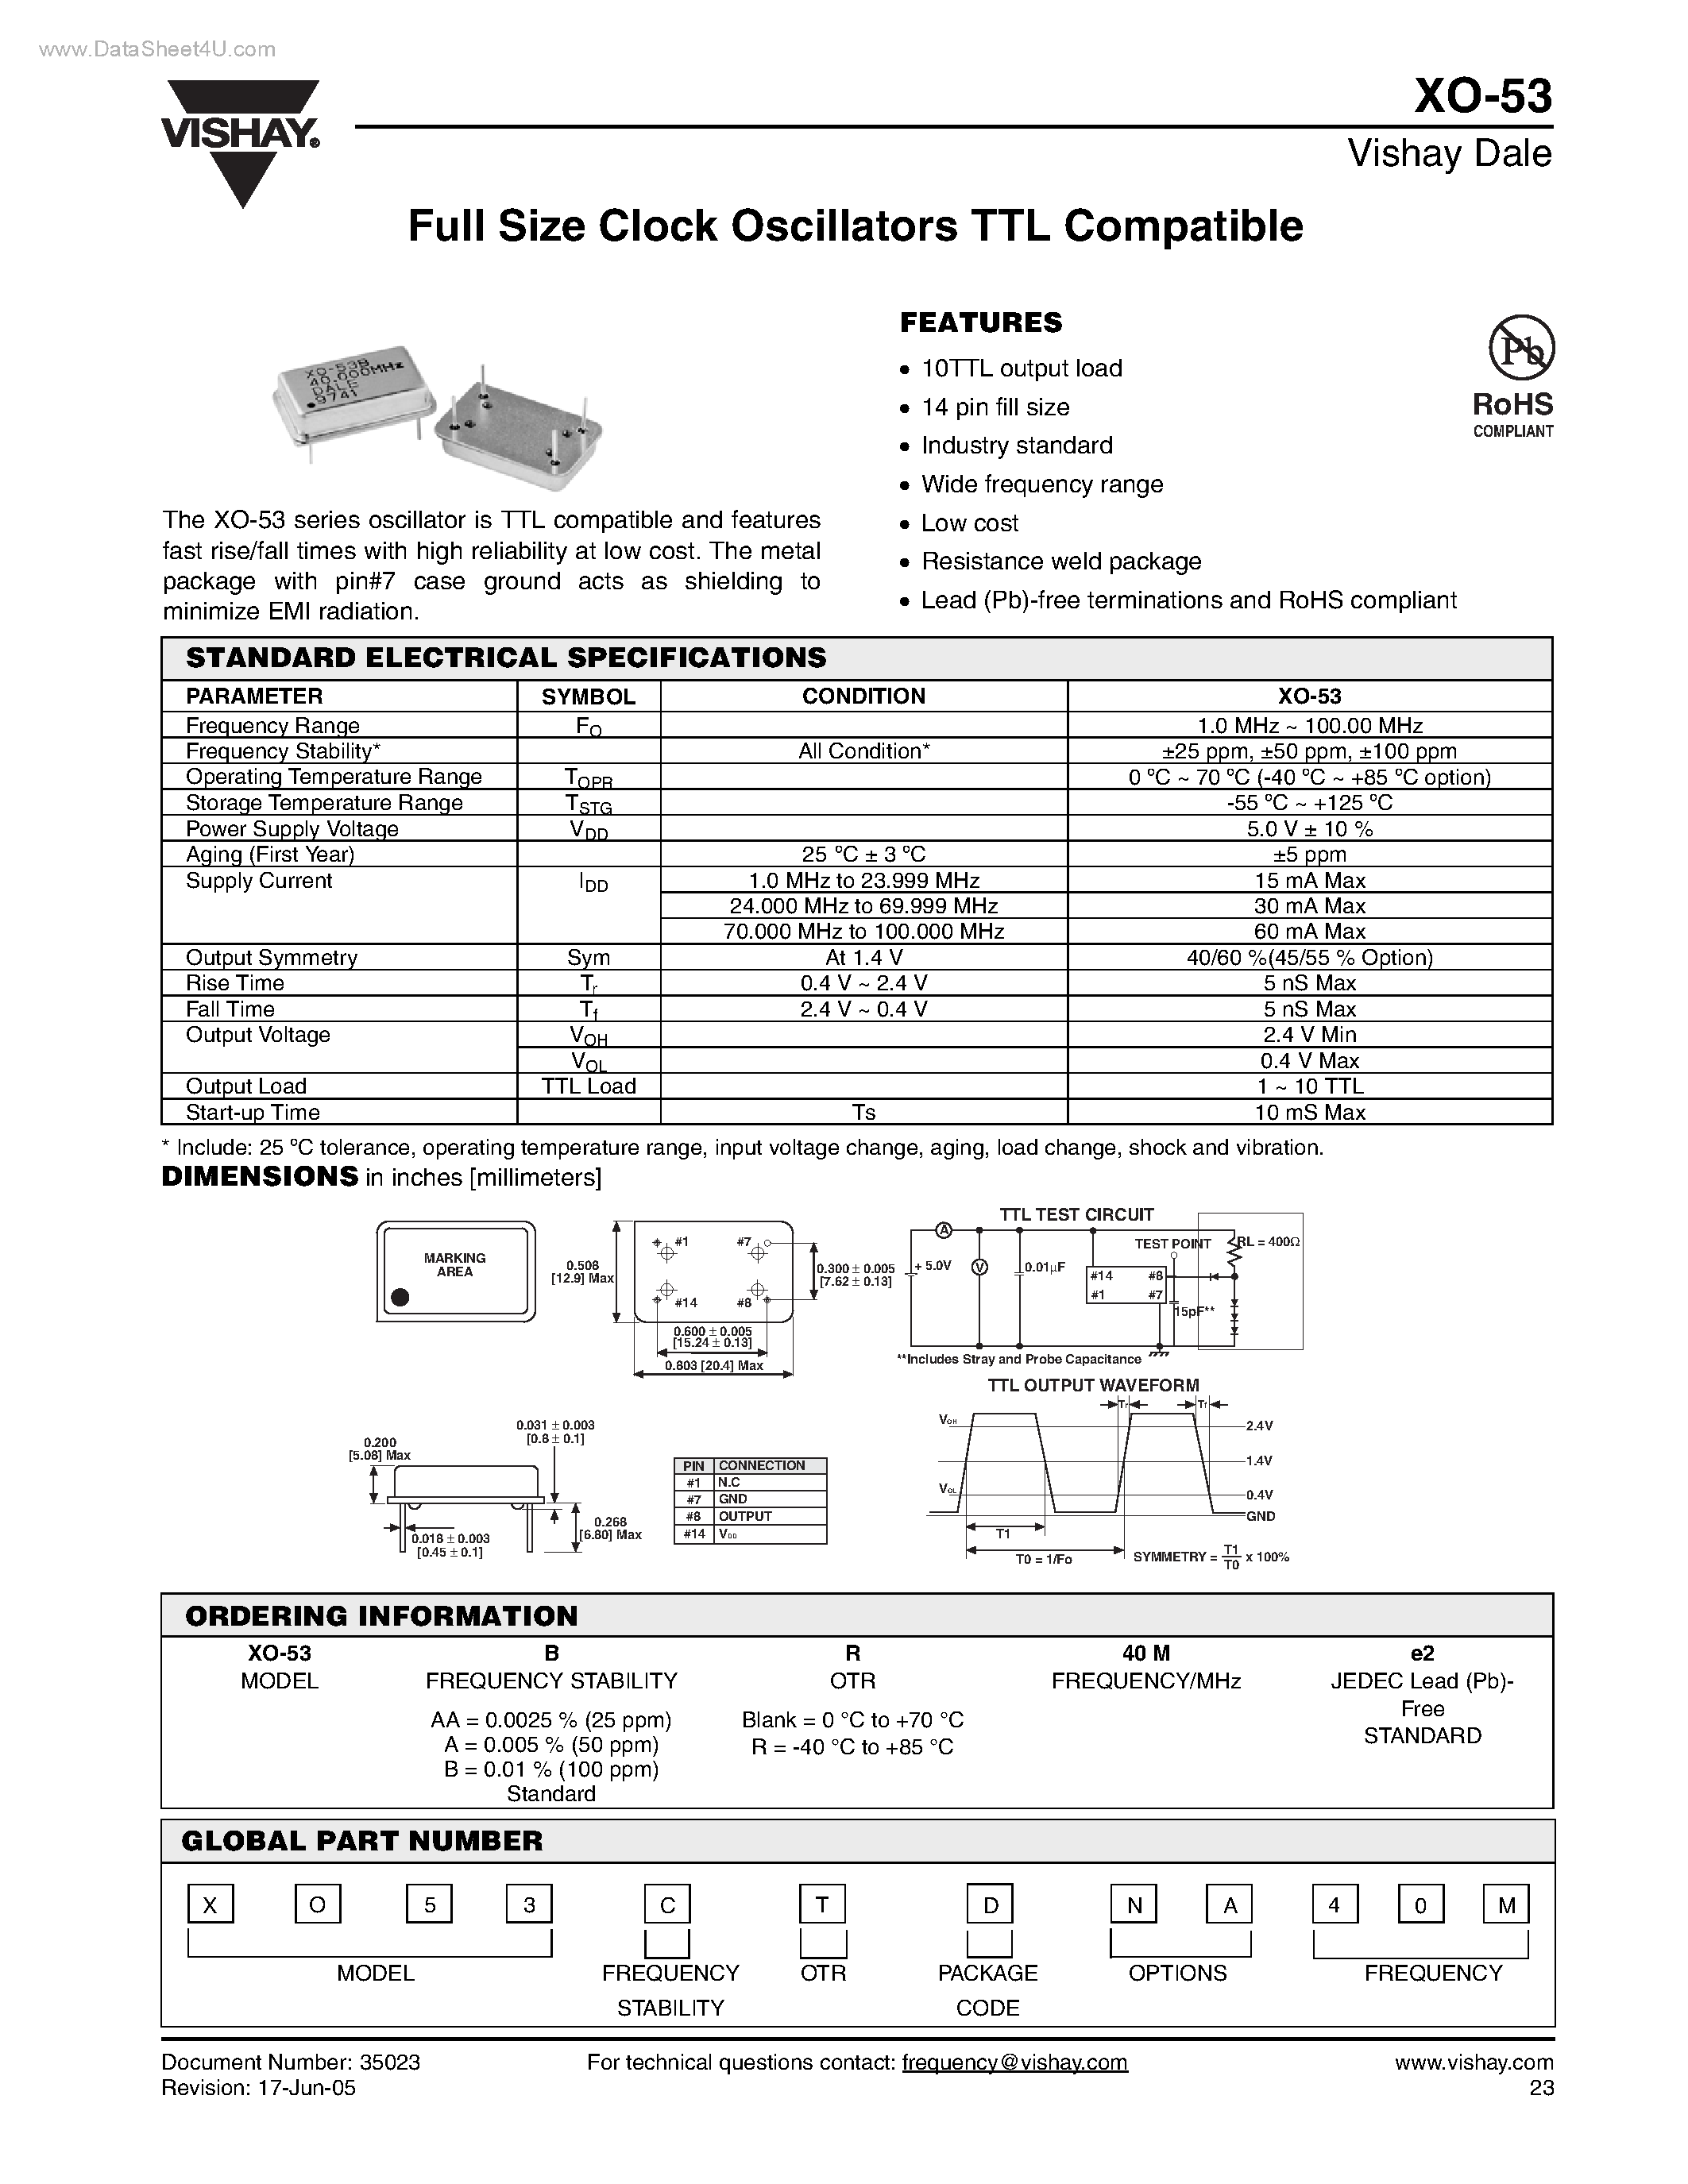 Datasheet XO-53 - Full Size Clock Oscillators TTL Compatible page 1